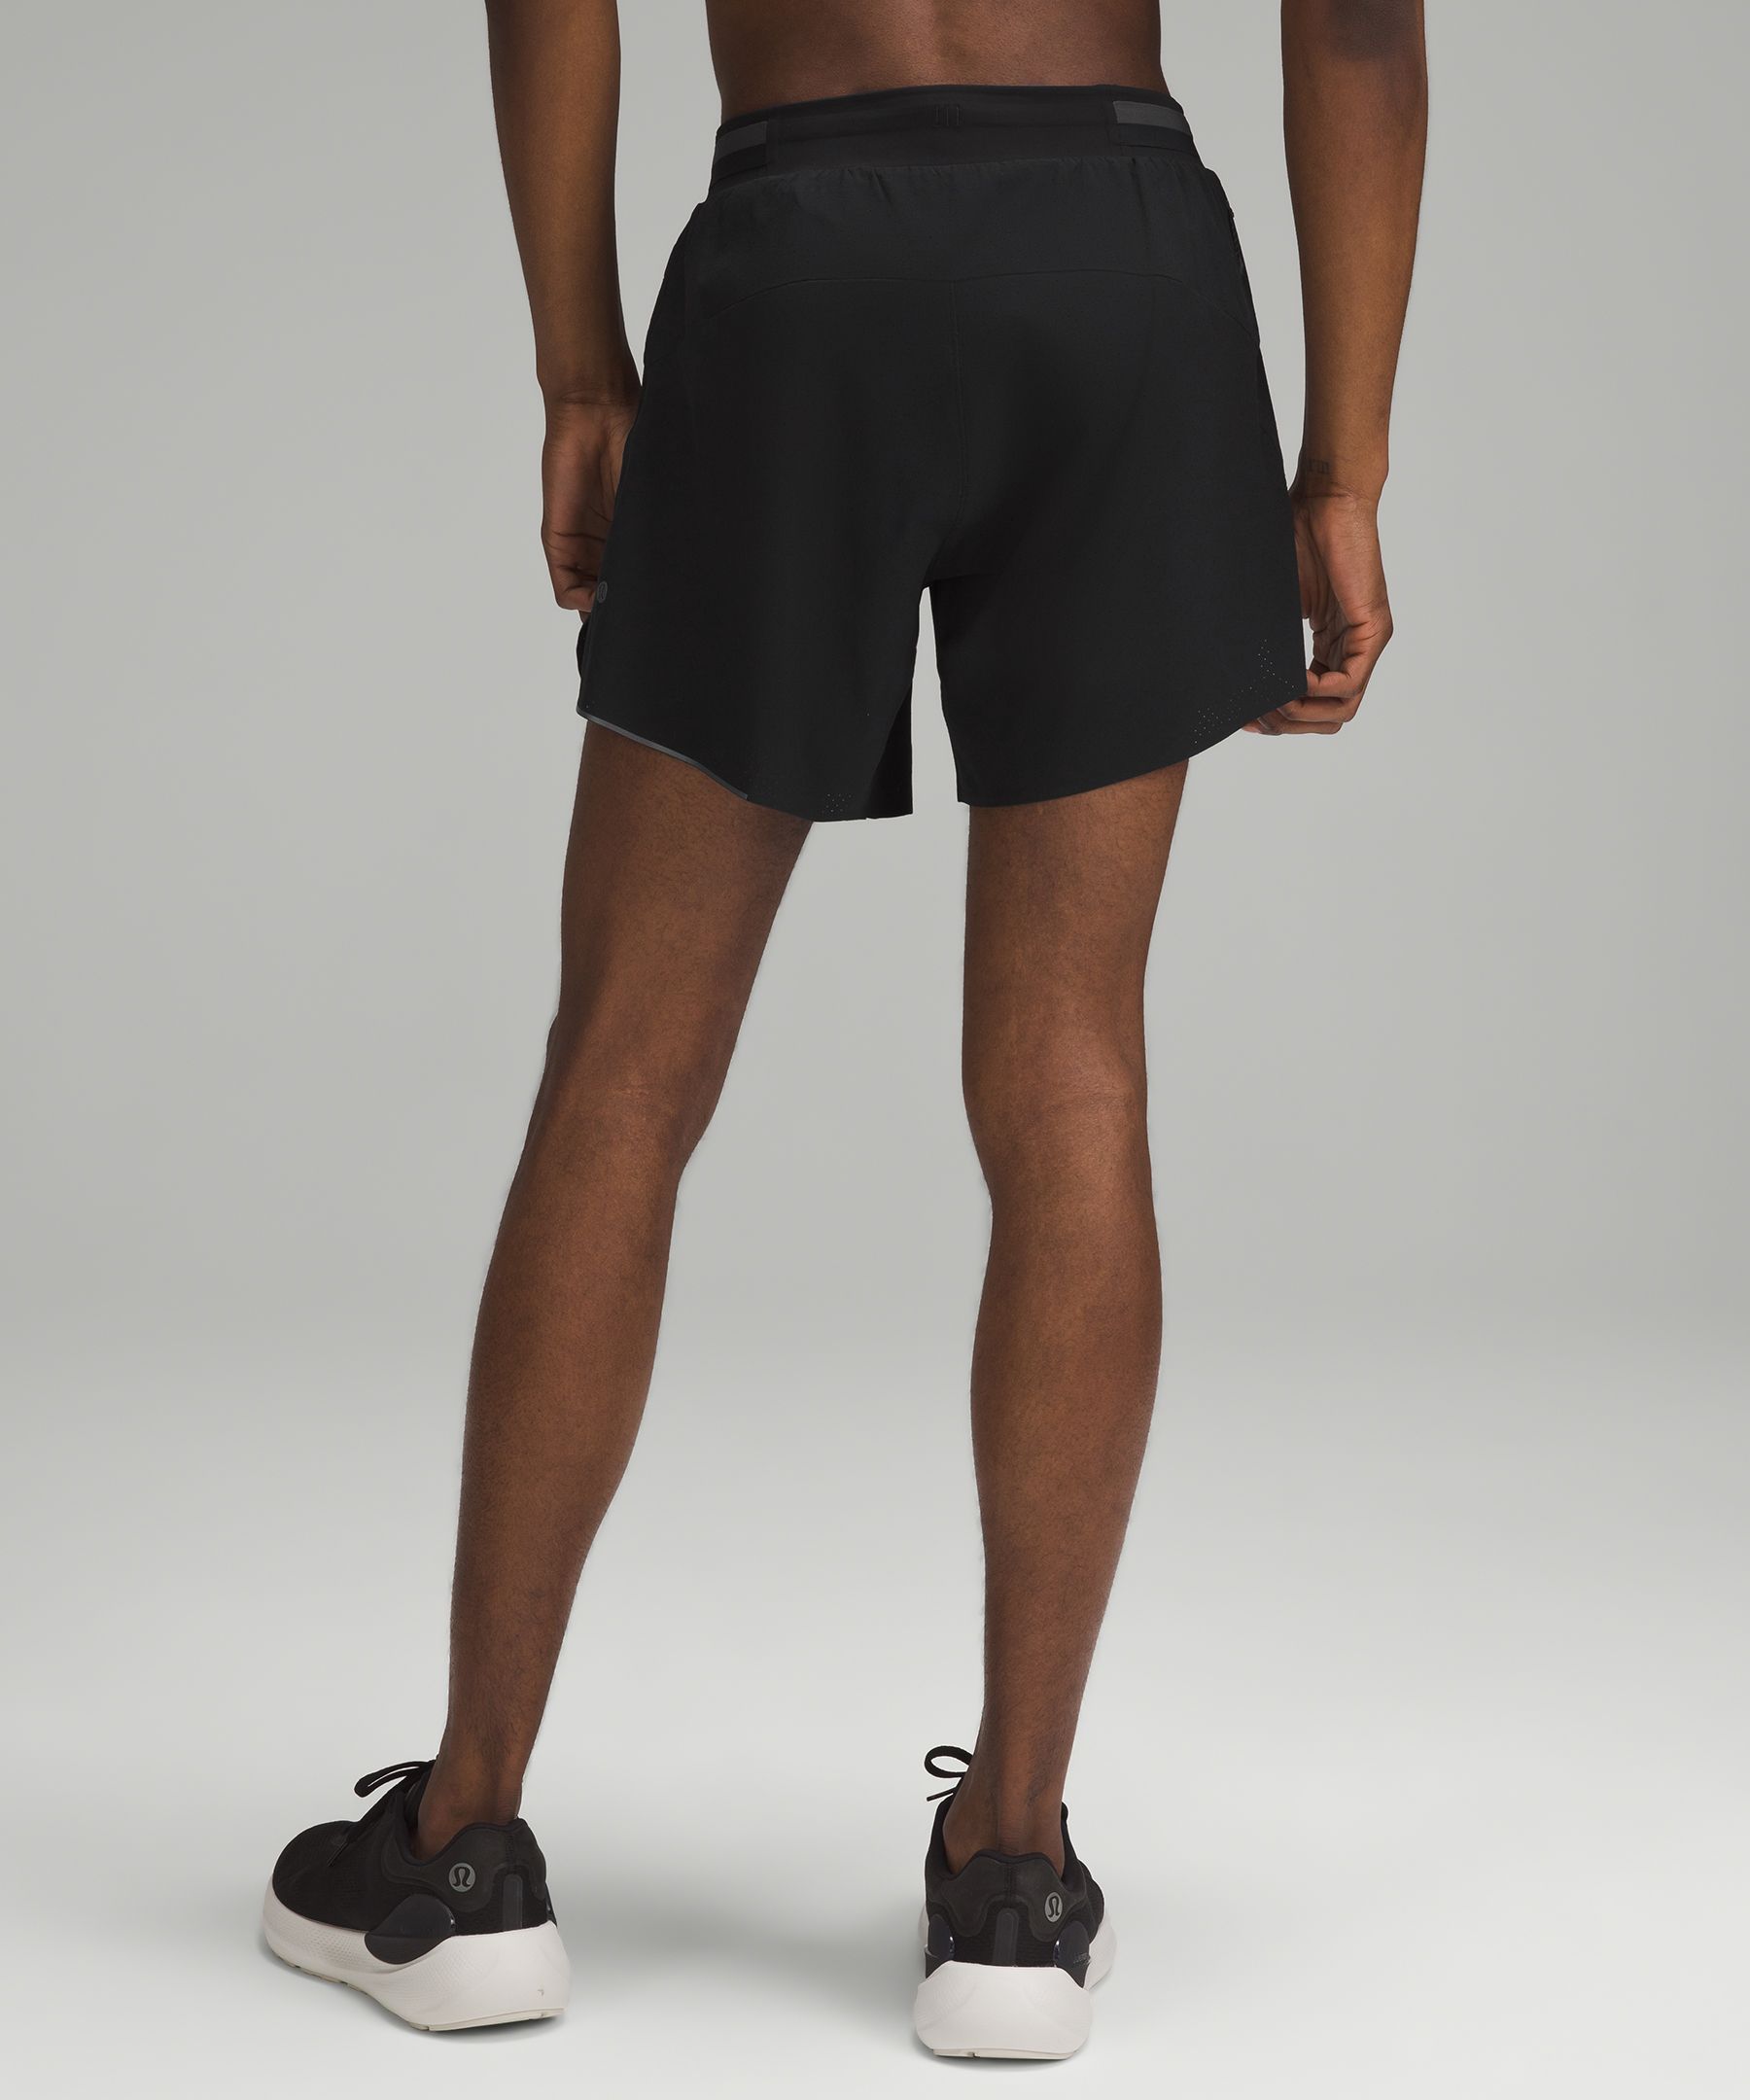 LULULEMON Black Zipper Mini Shorts Size 6